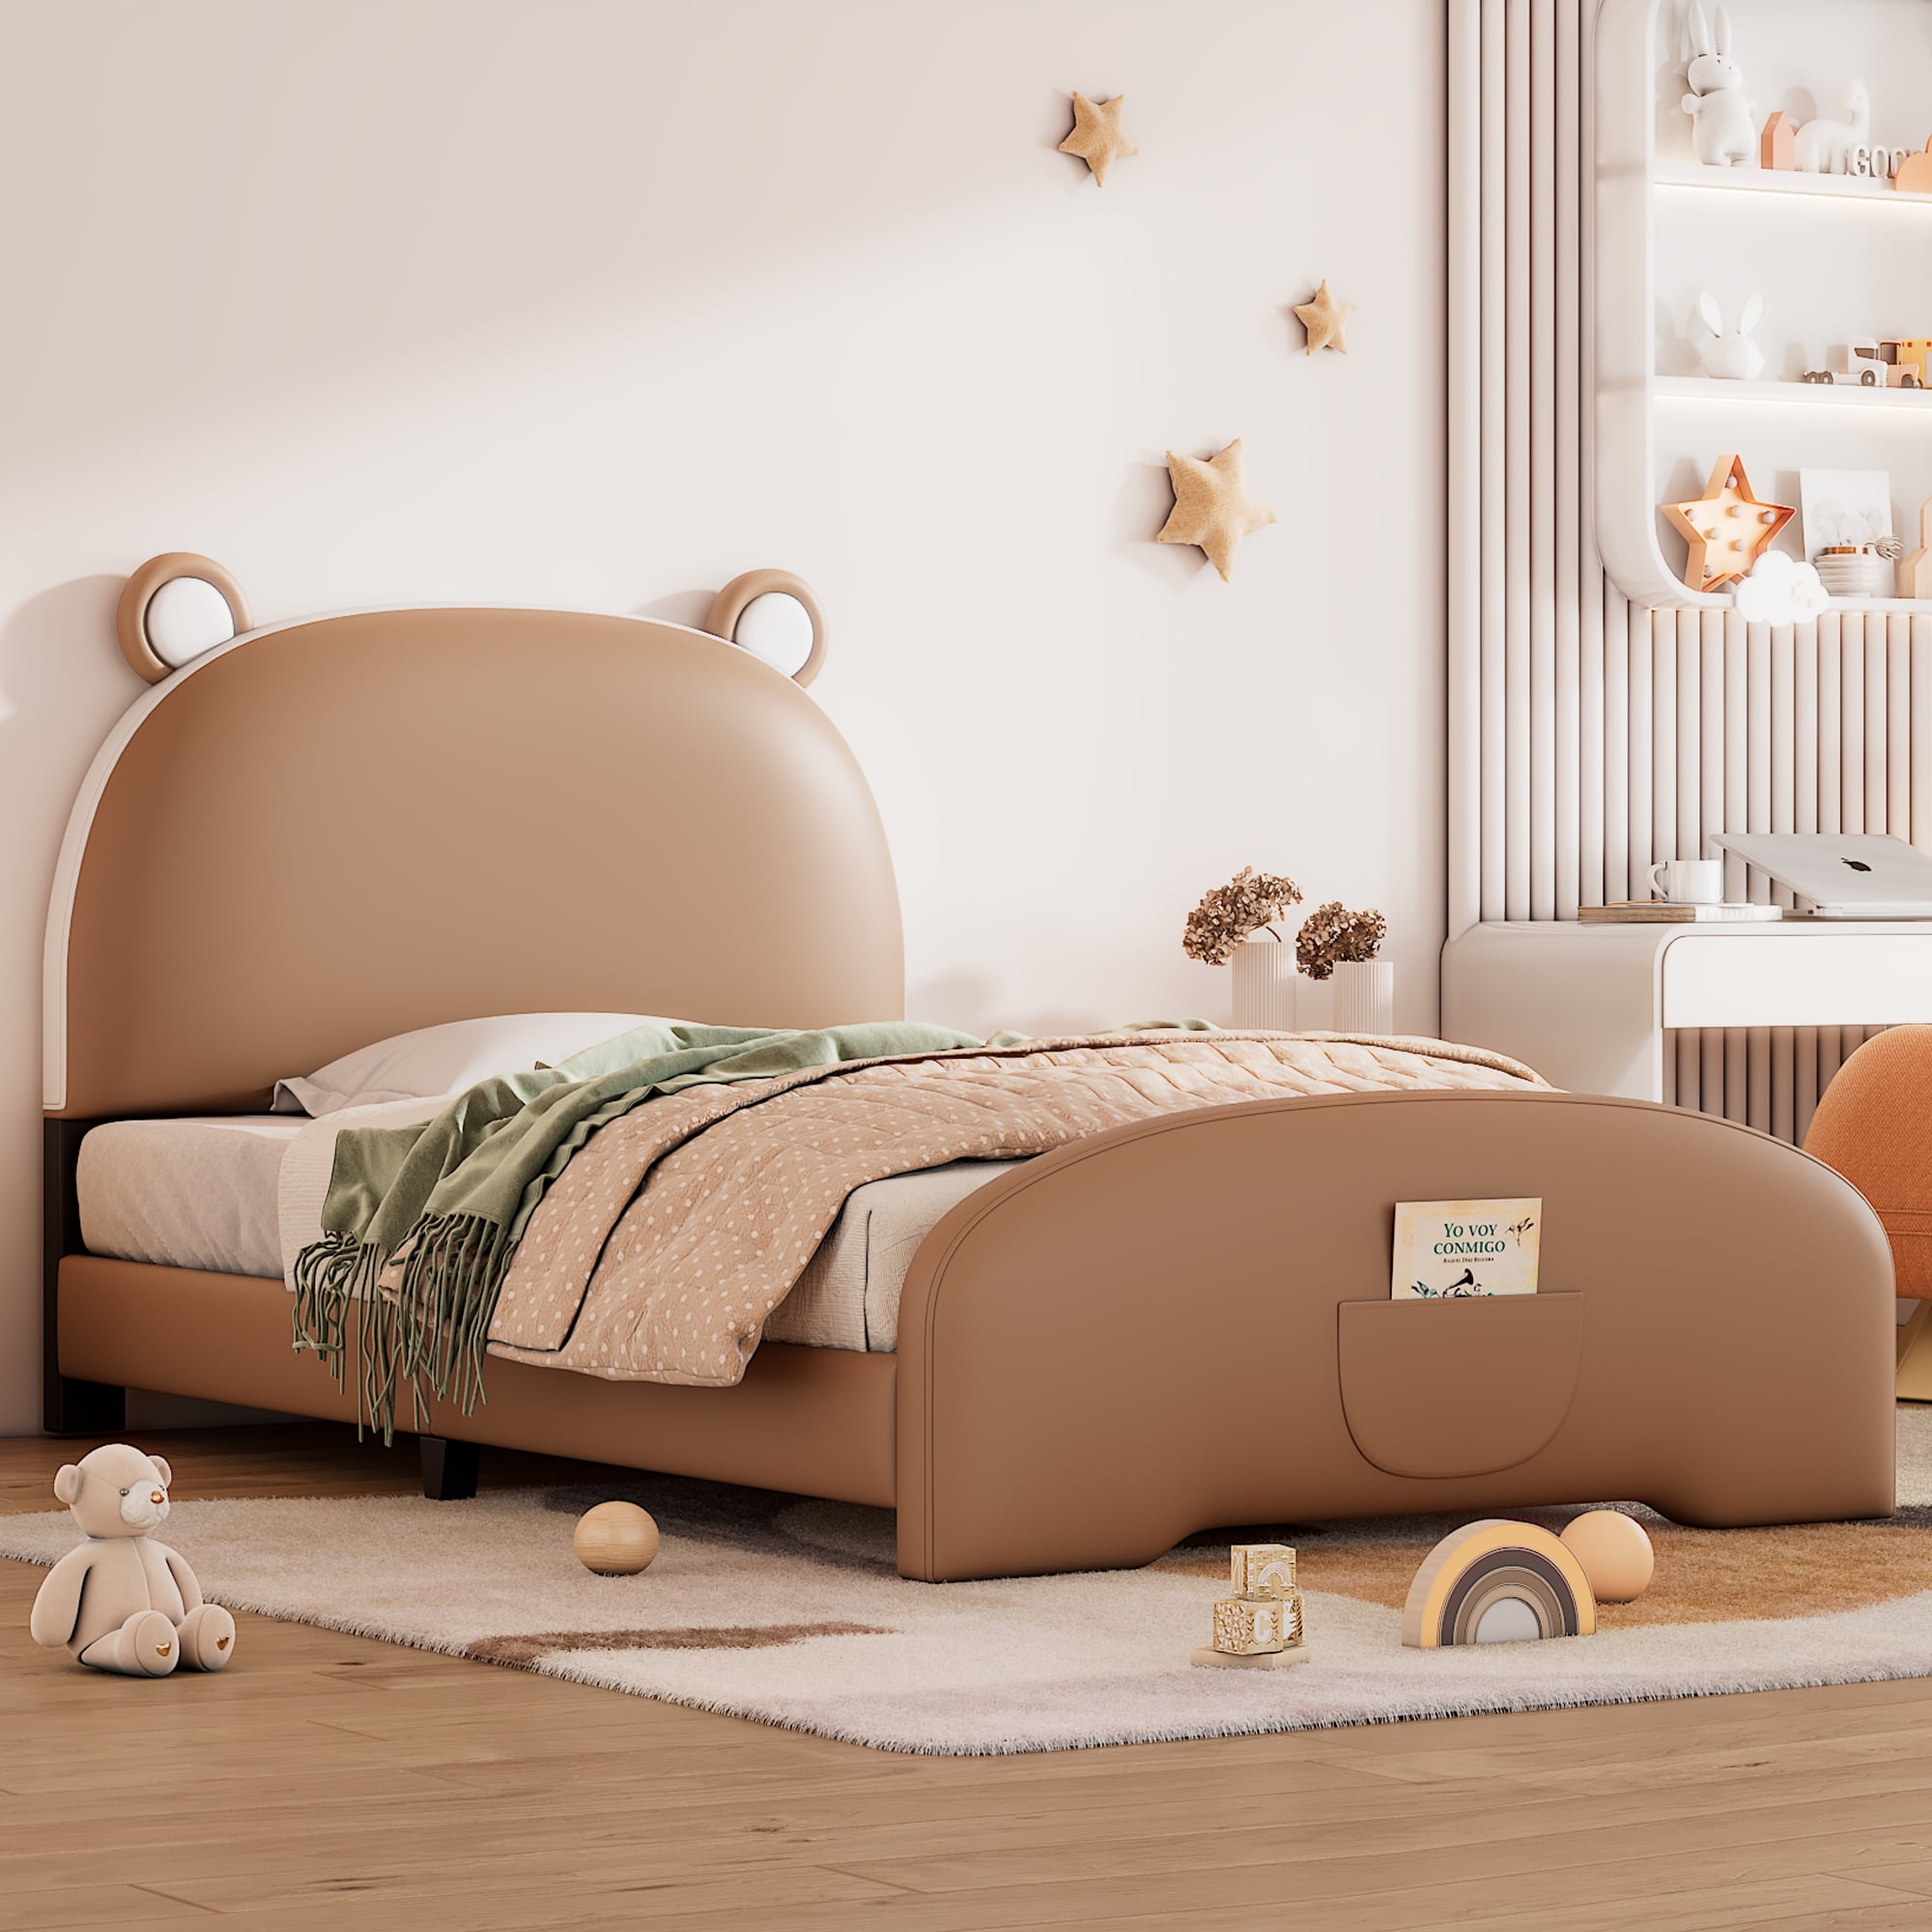 cute beds